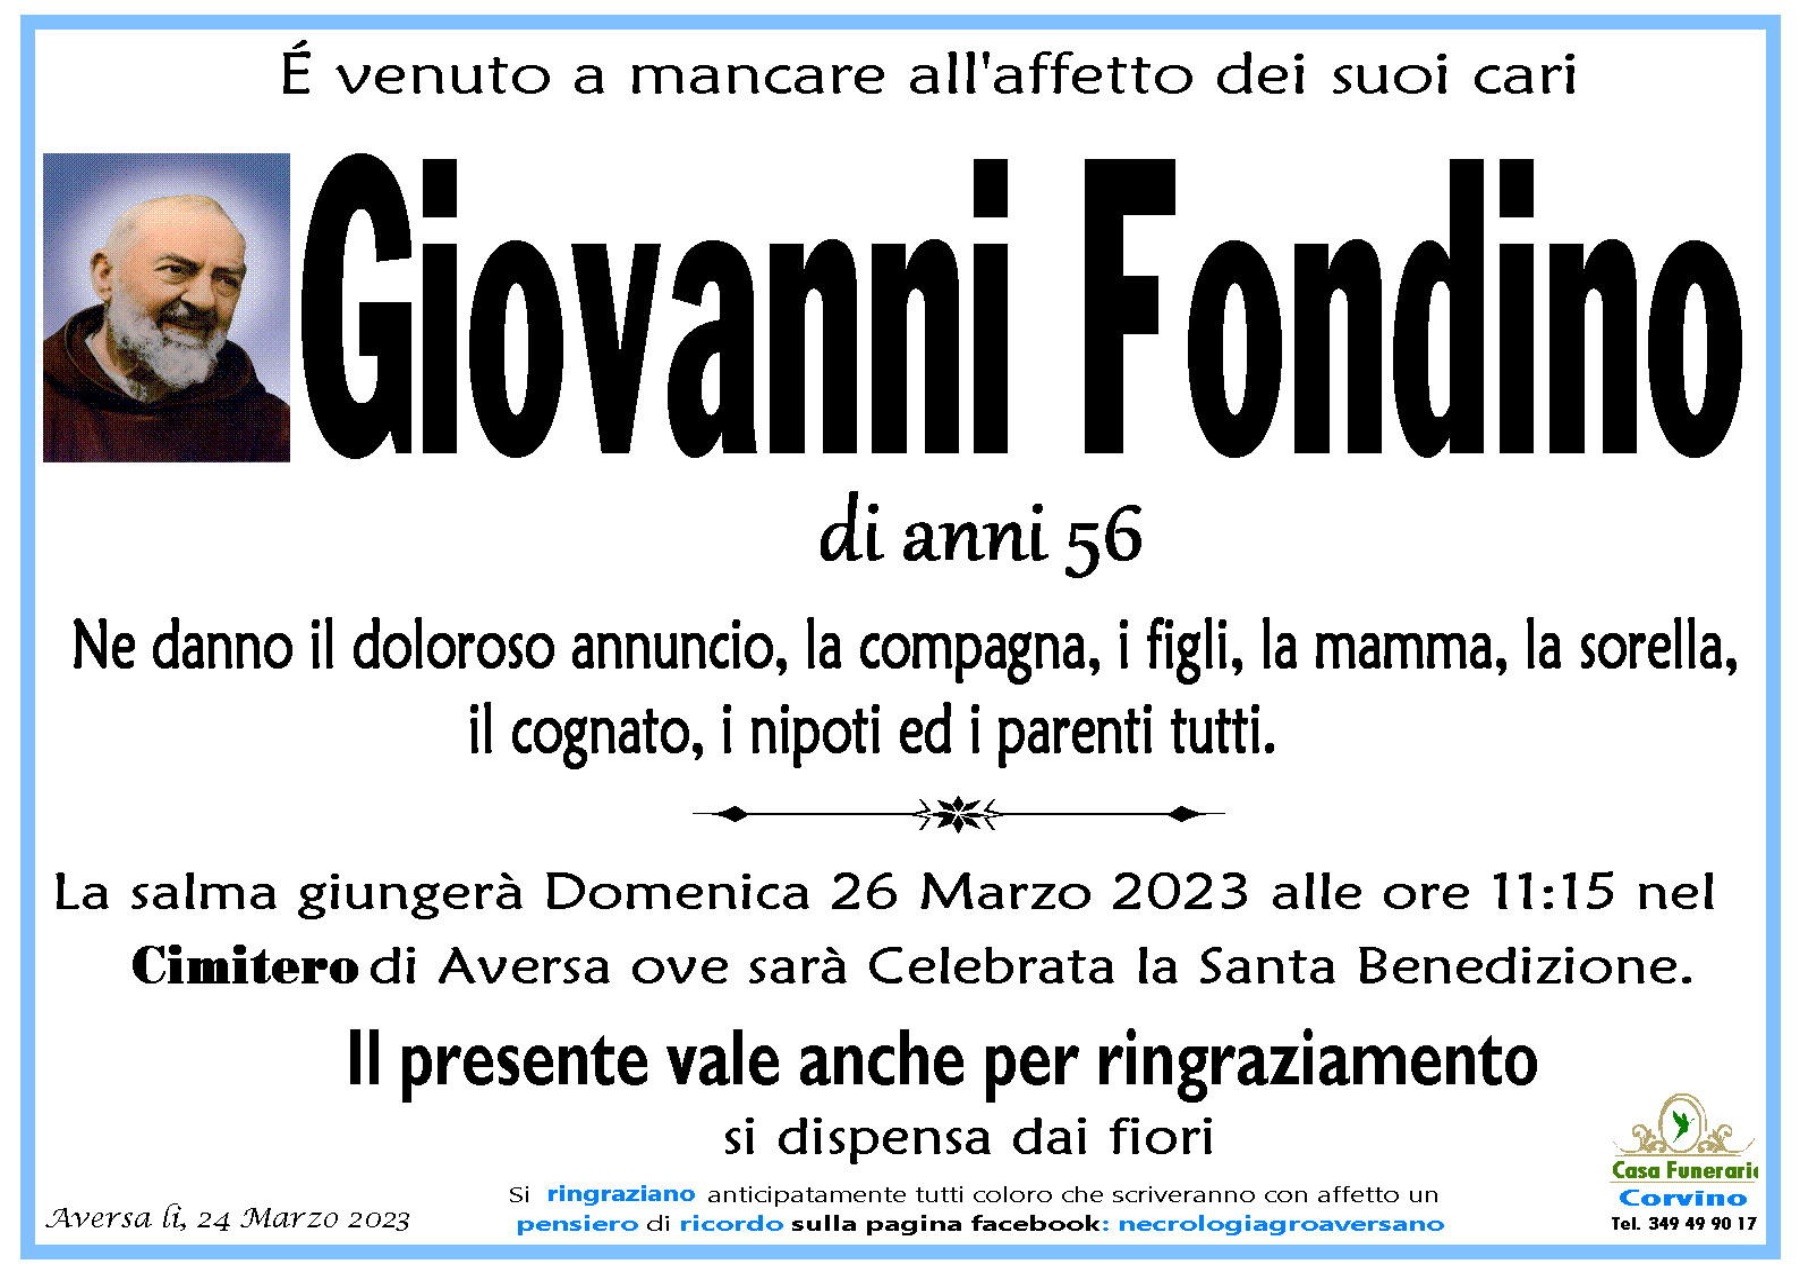 Giovanni Fondino